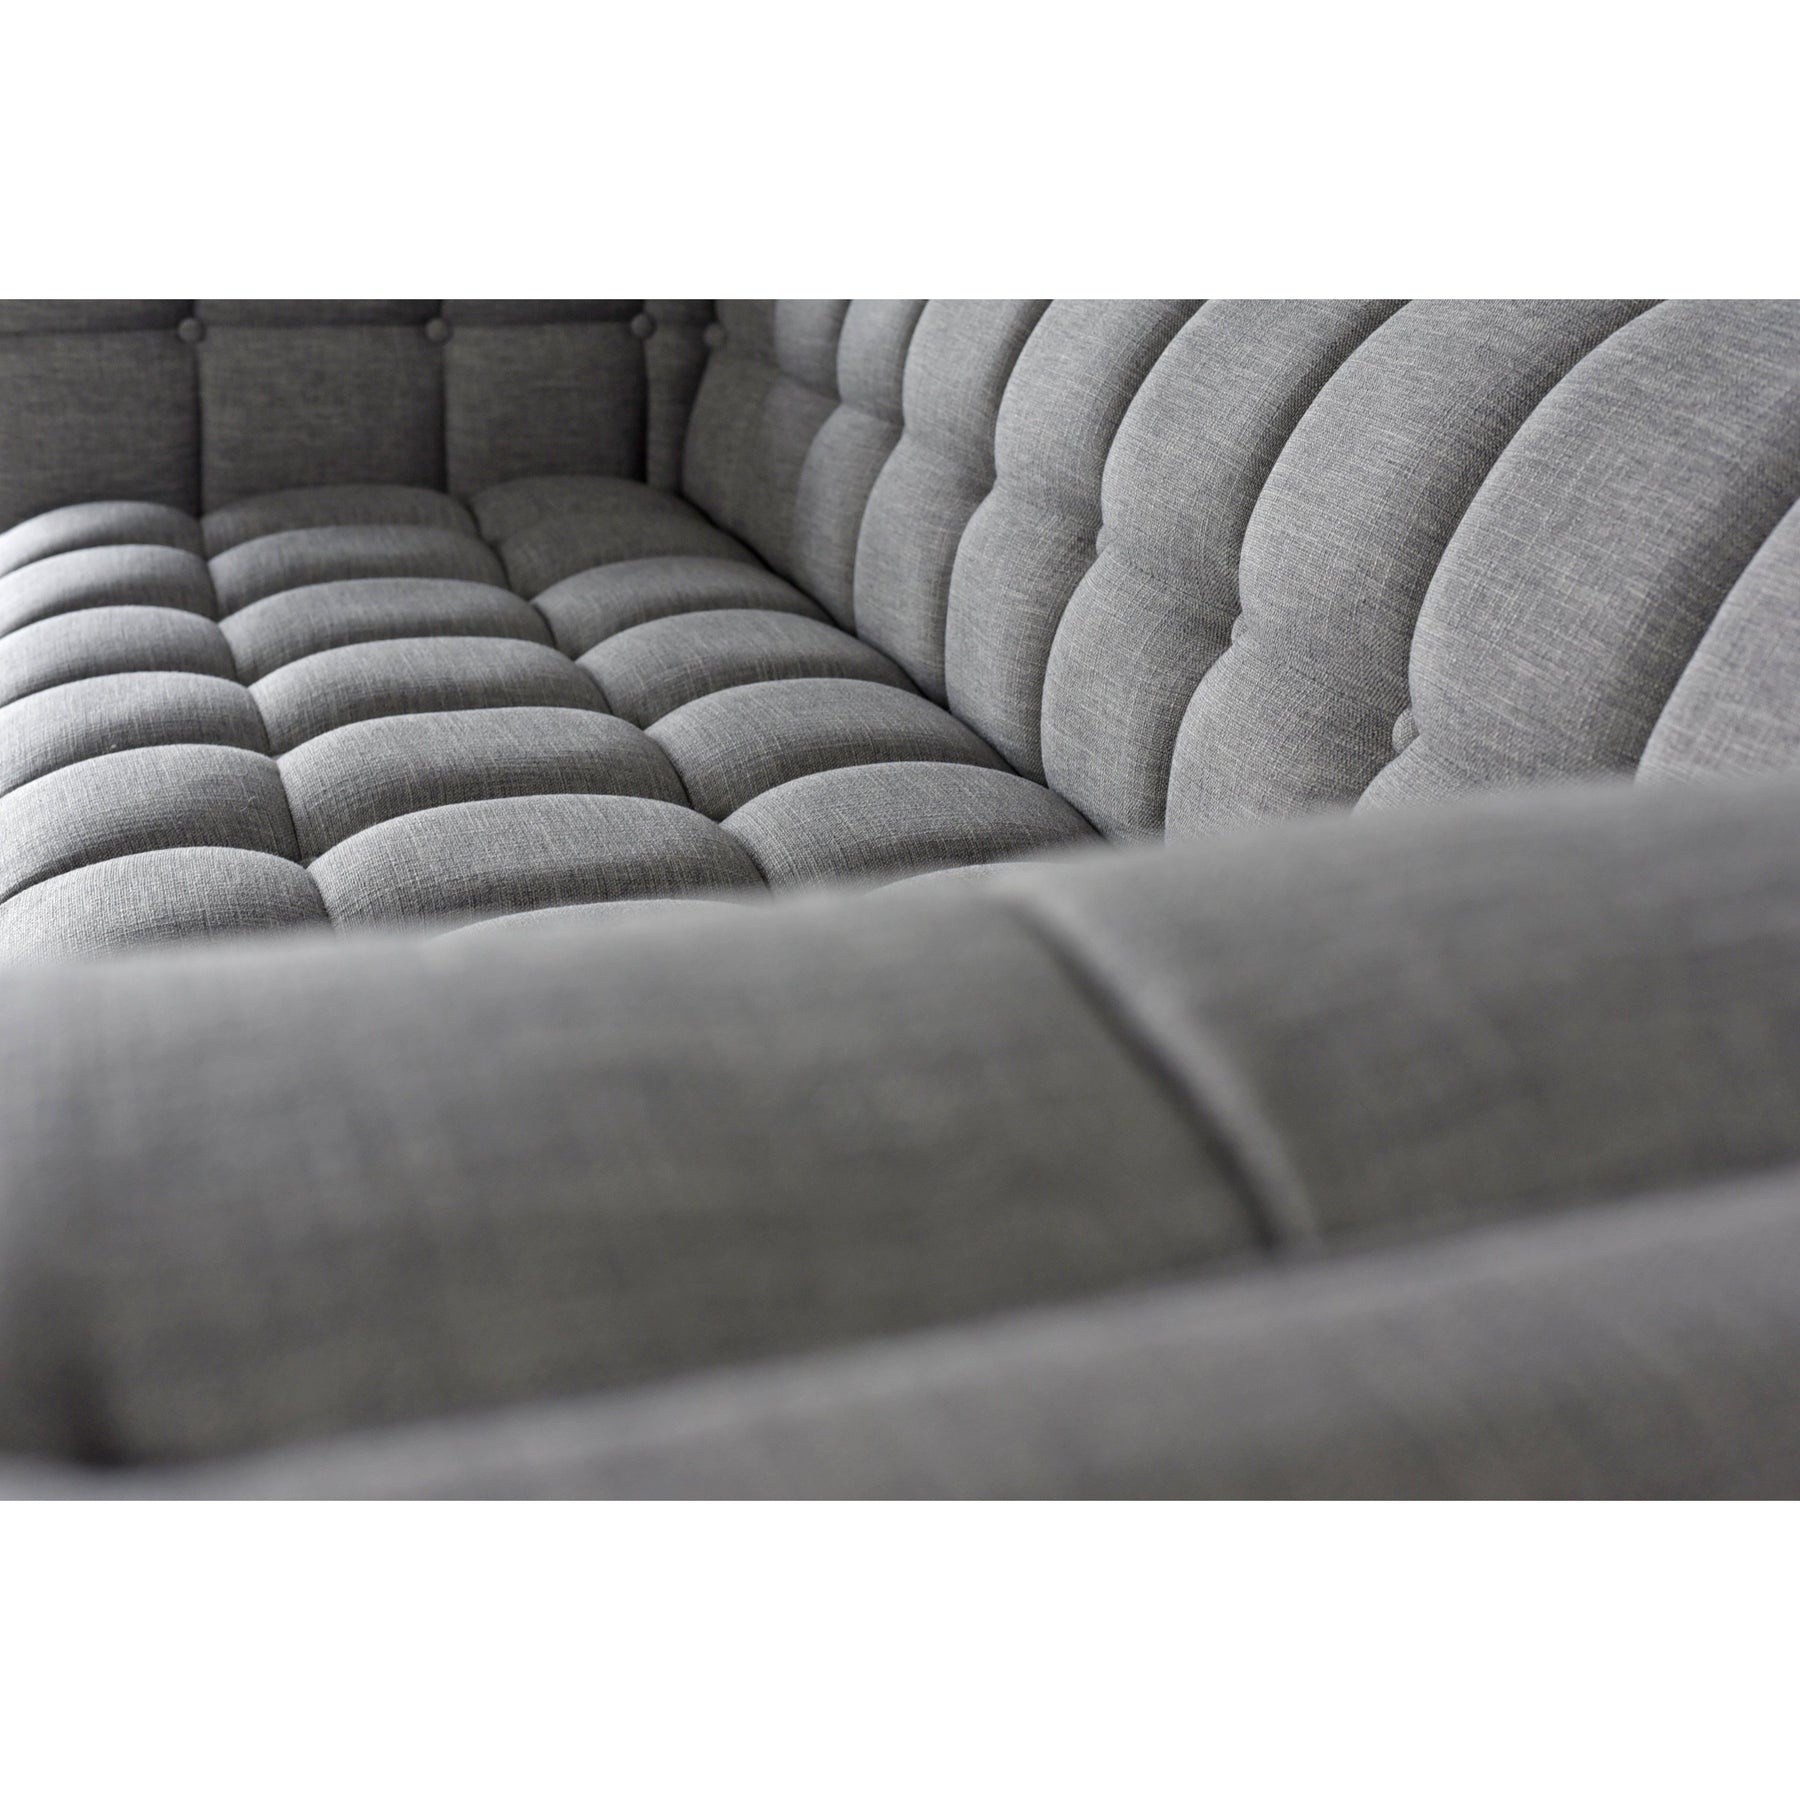 Edloe Finch Nest Modern Sofa